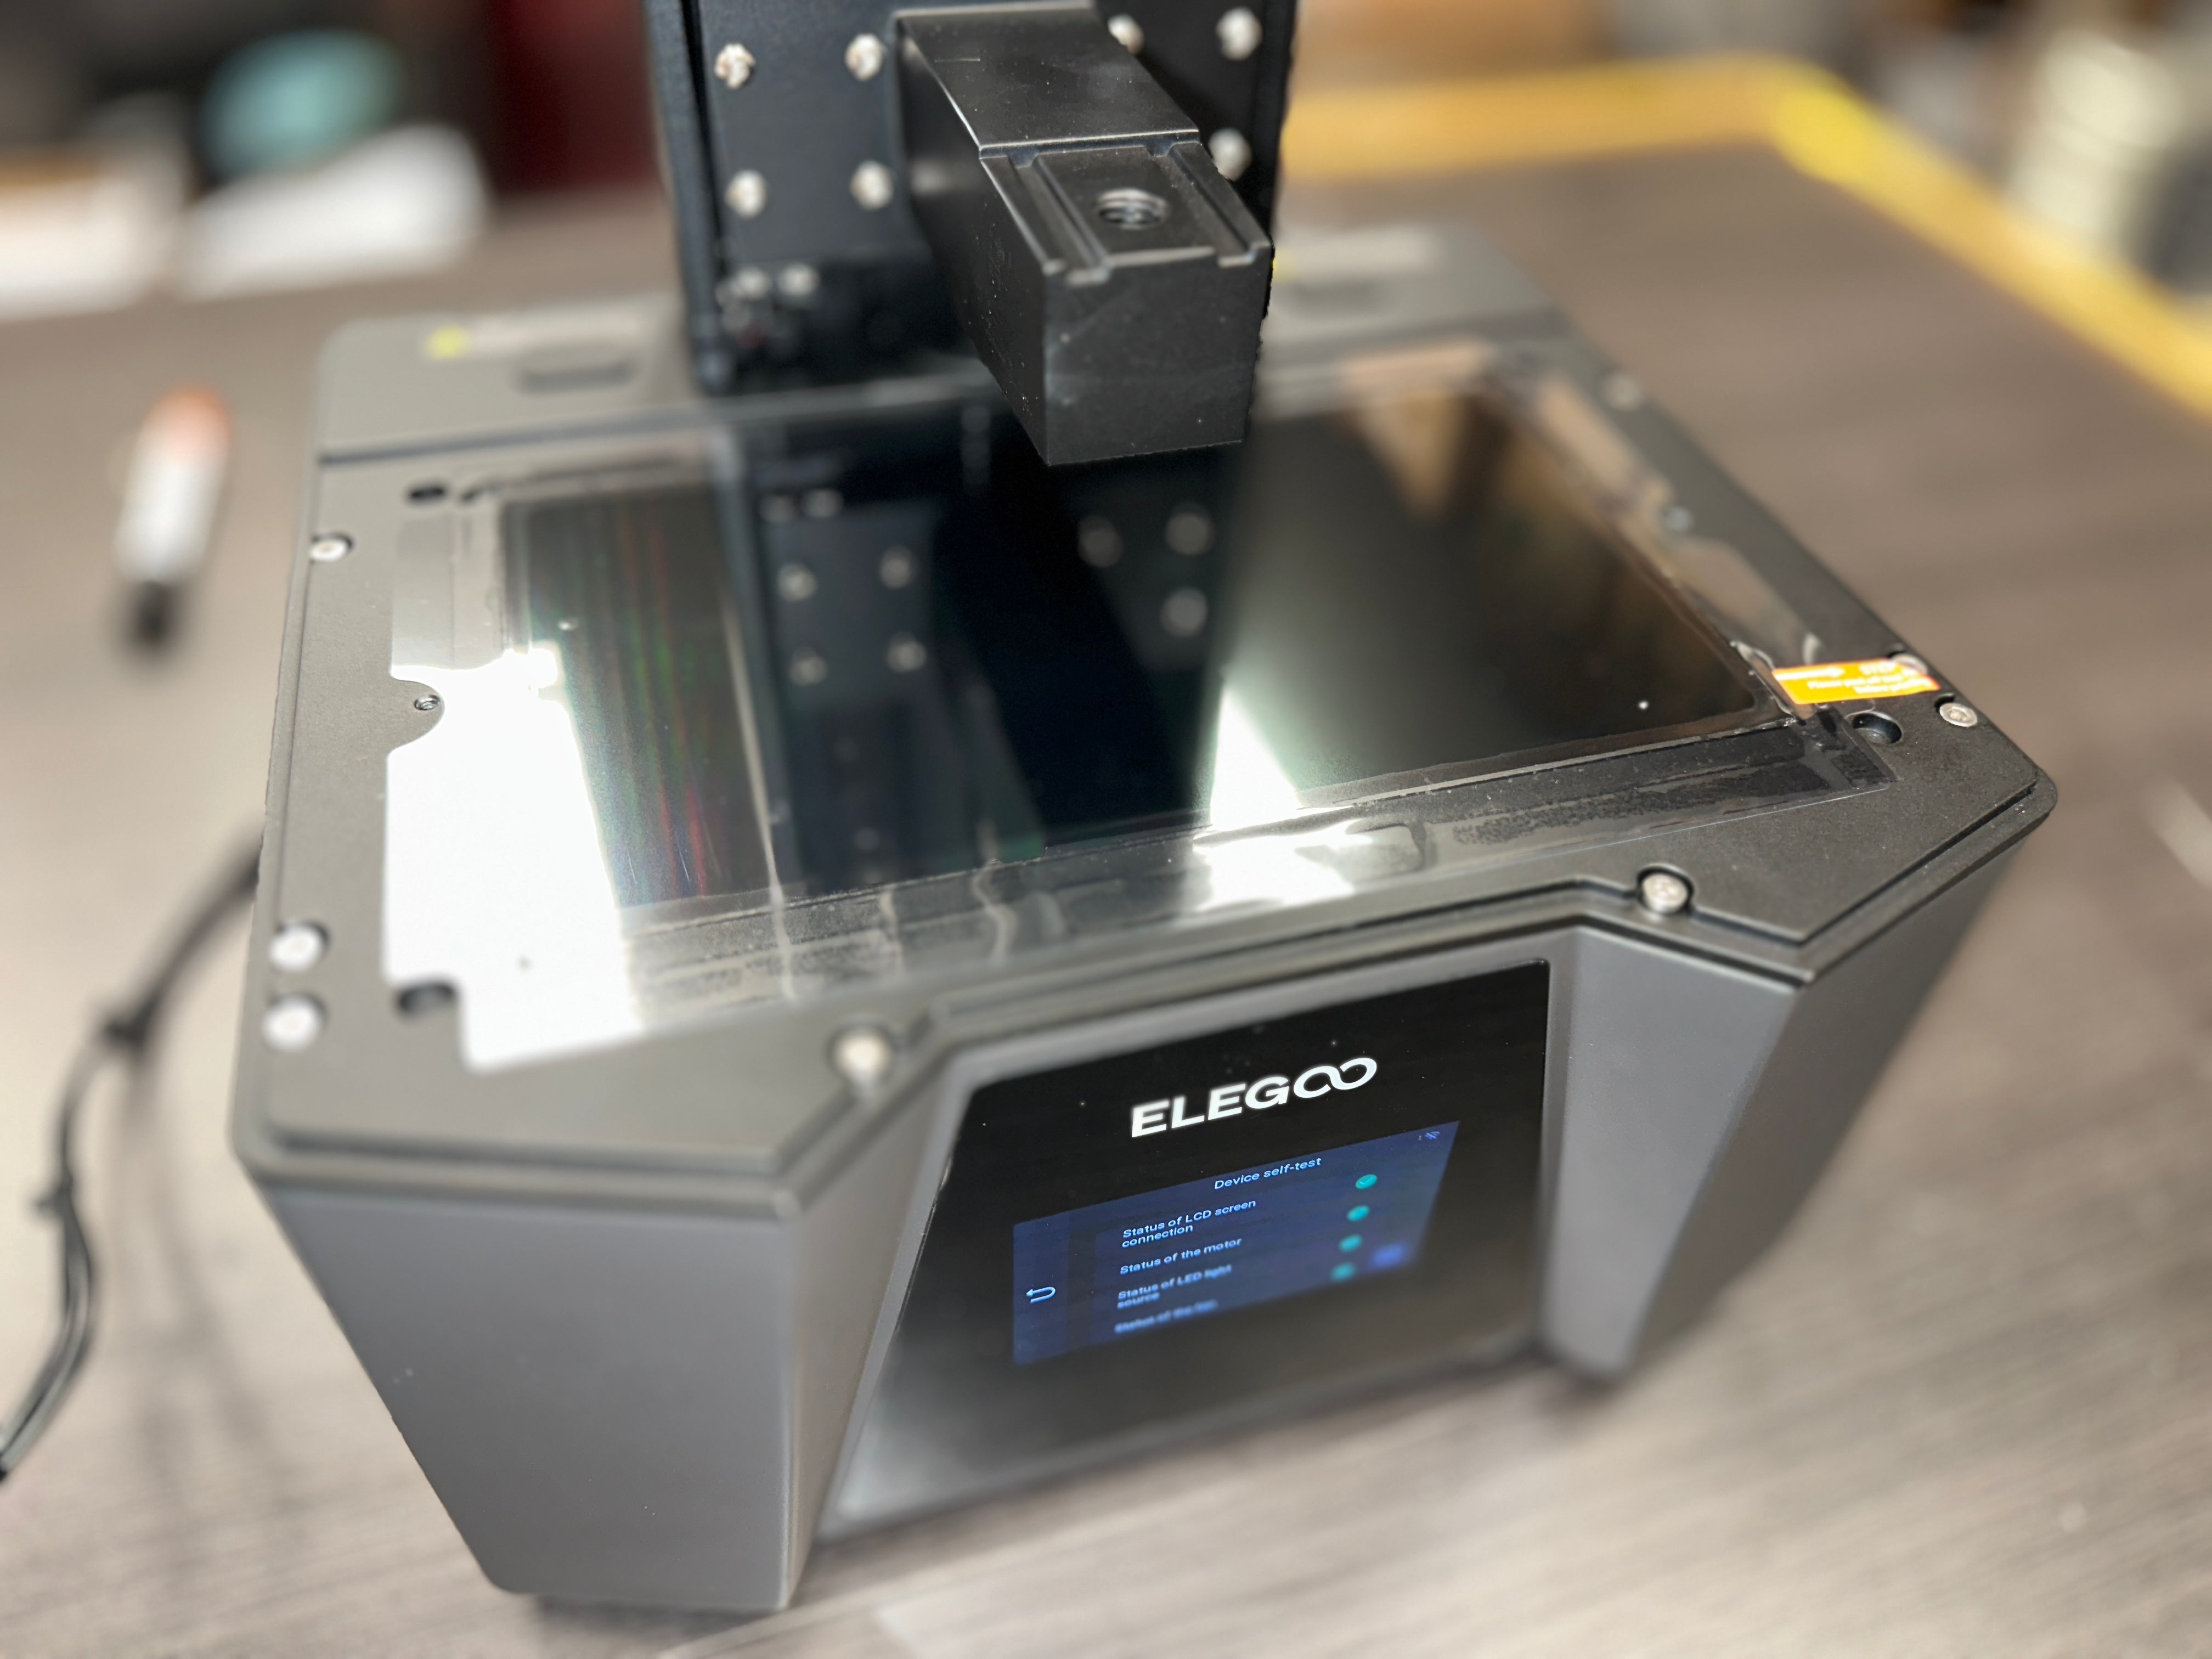 Elegoo Saturn 3 Ultra - 3D Printer